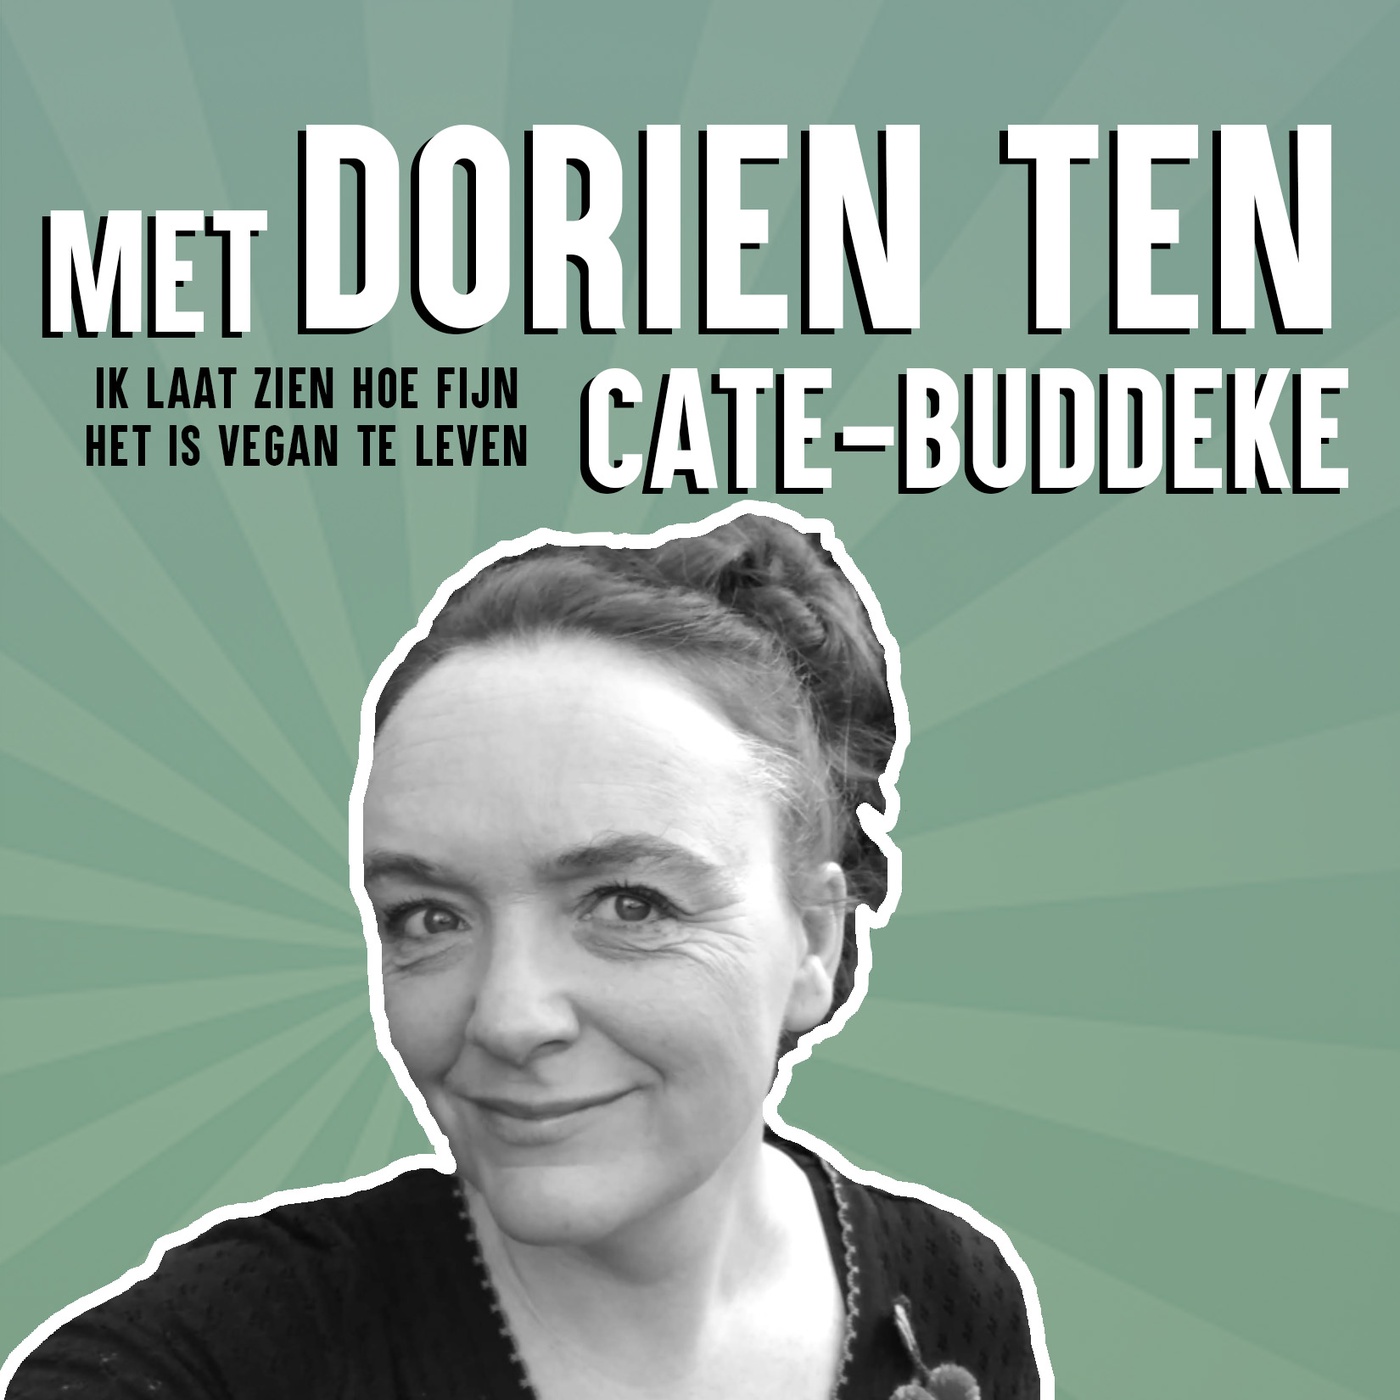 Vegaan met die banaan: Interview met foodblogger Dorien ten Cate-Buddeke